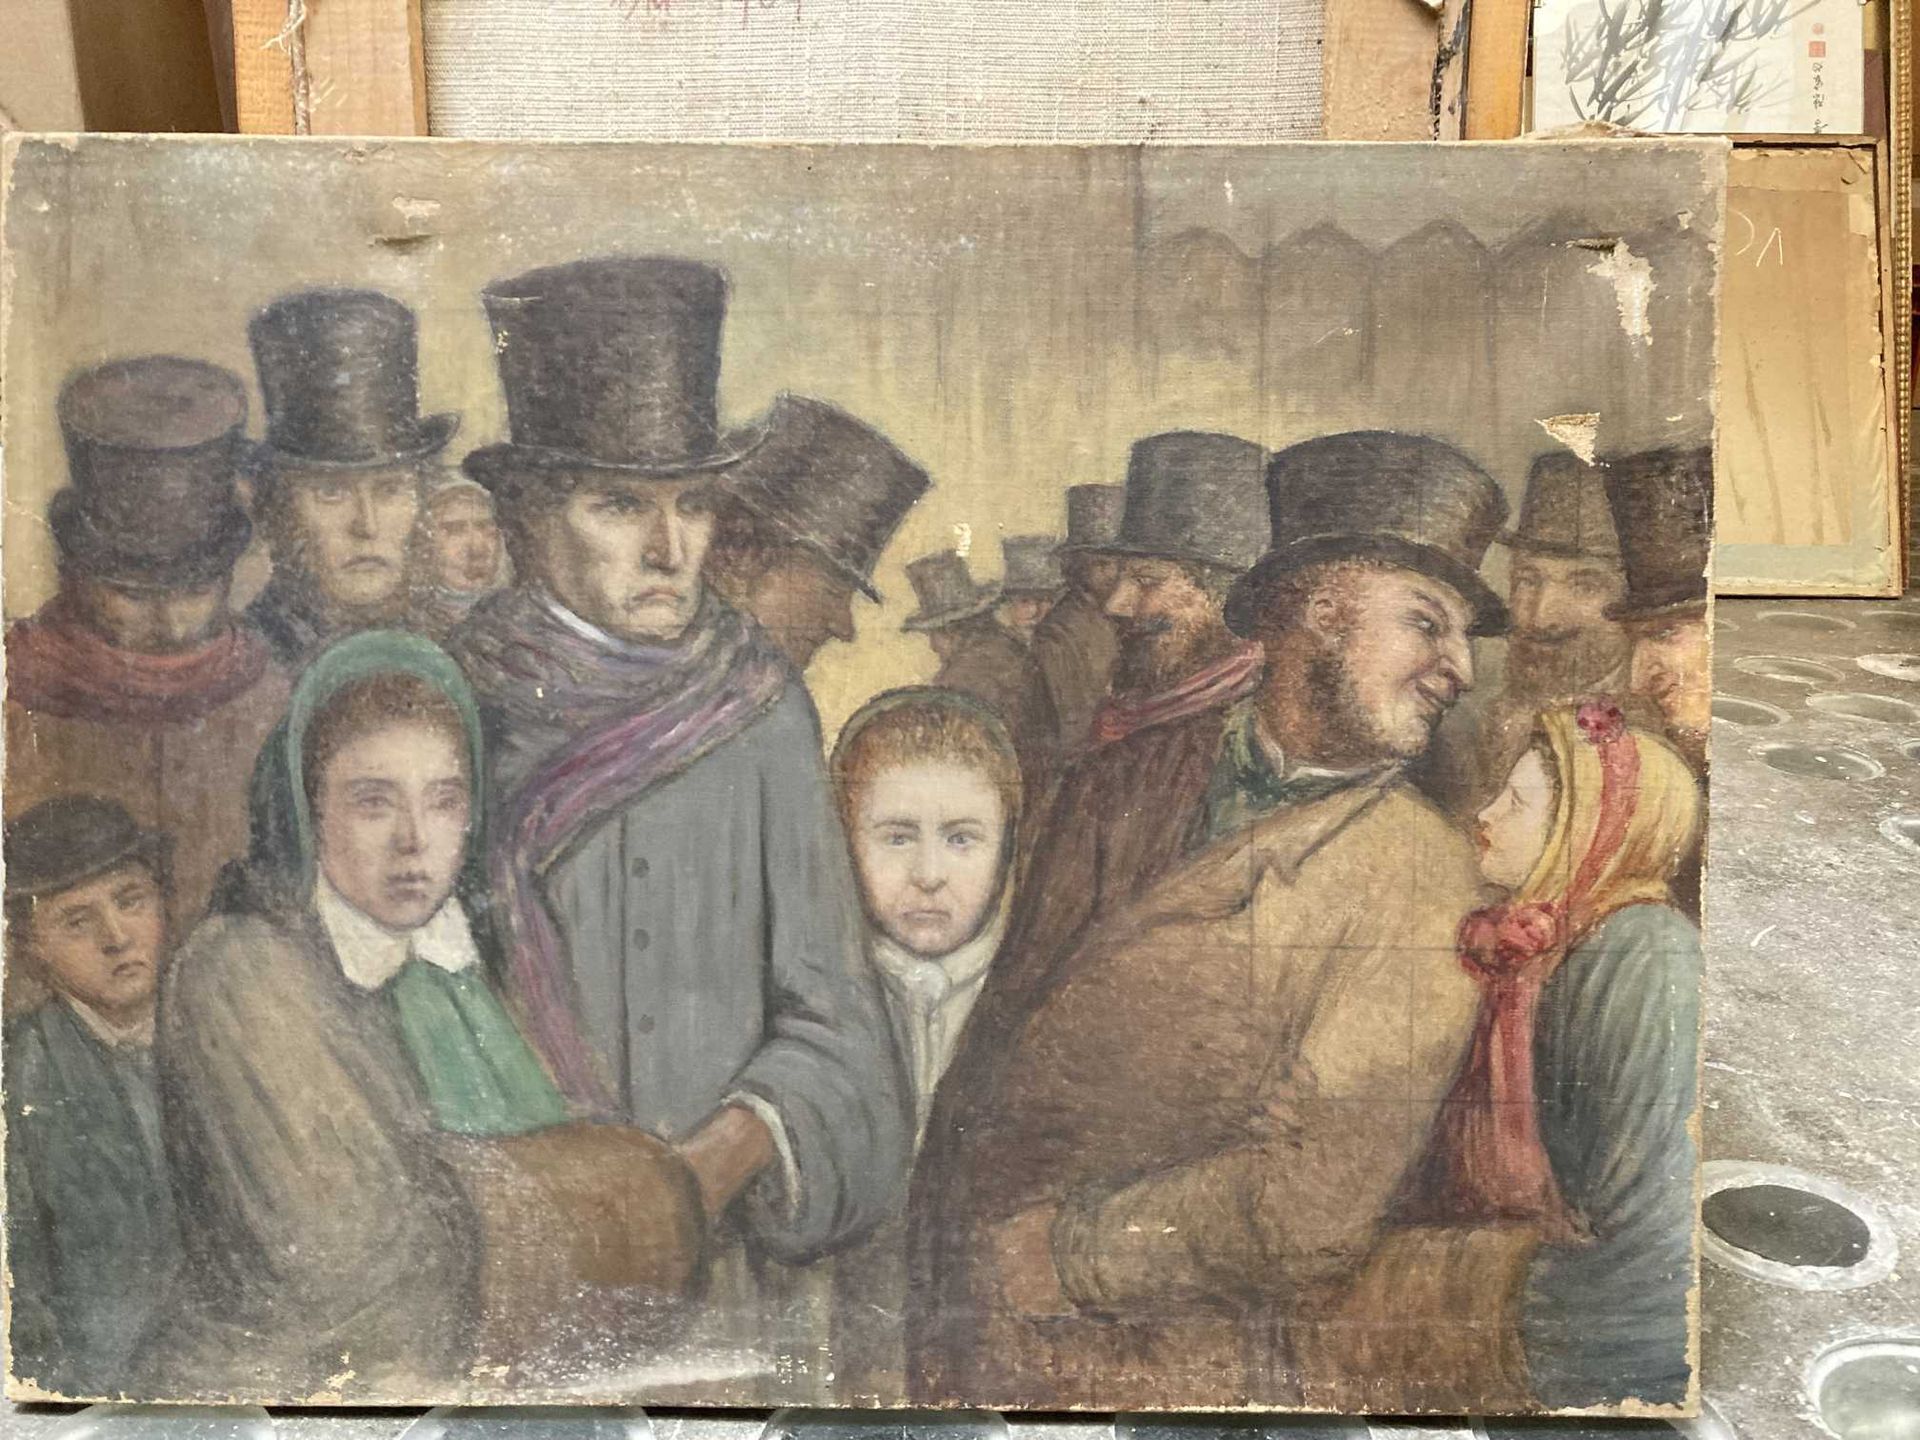 Null 20世纪的学校

冬天的人群

布面油画，瓷砖工程

49 x 65厘米

(事故)